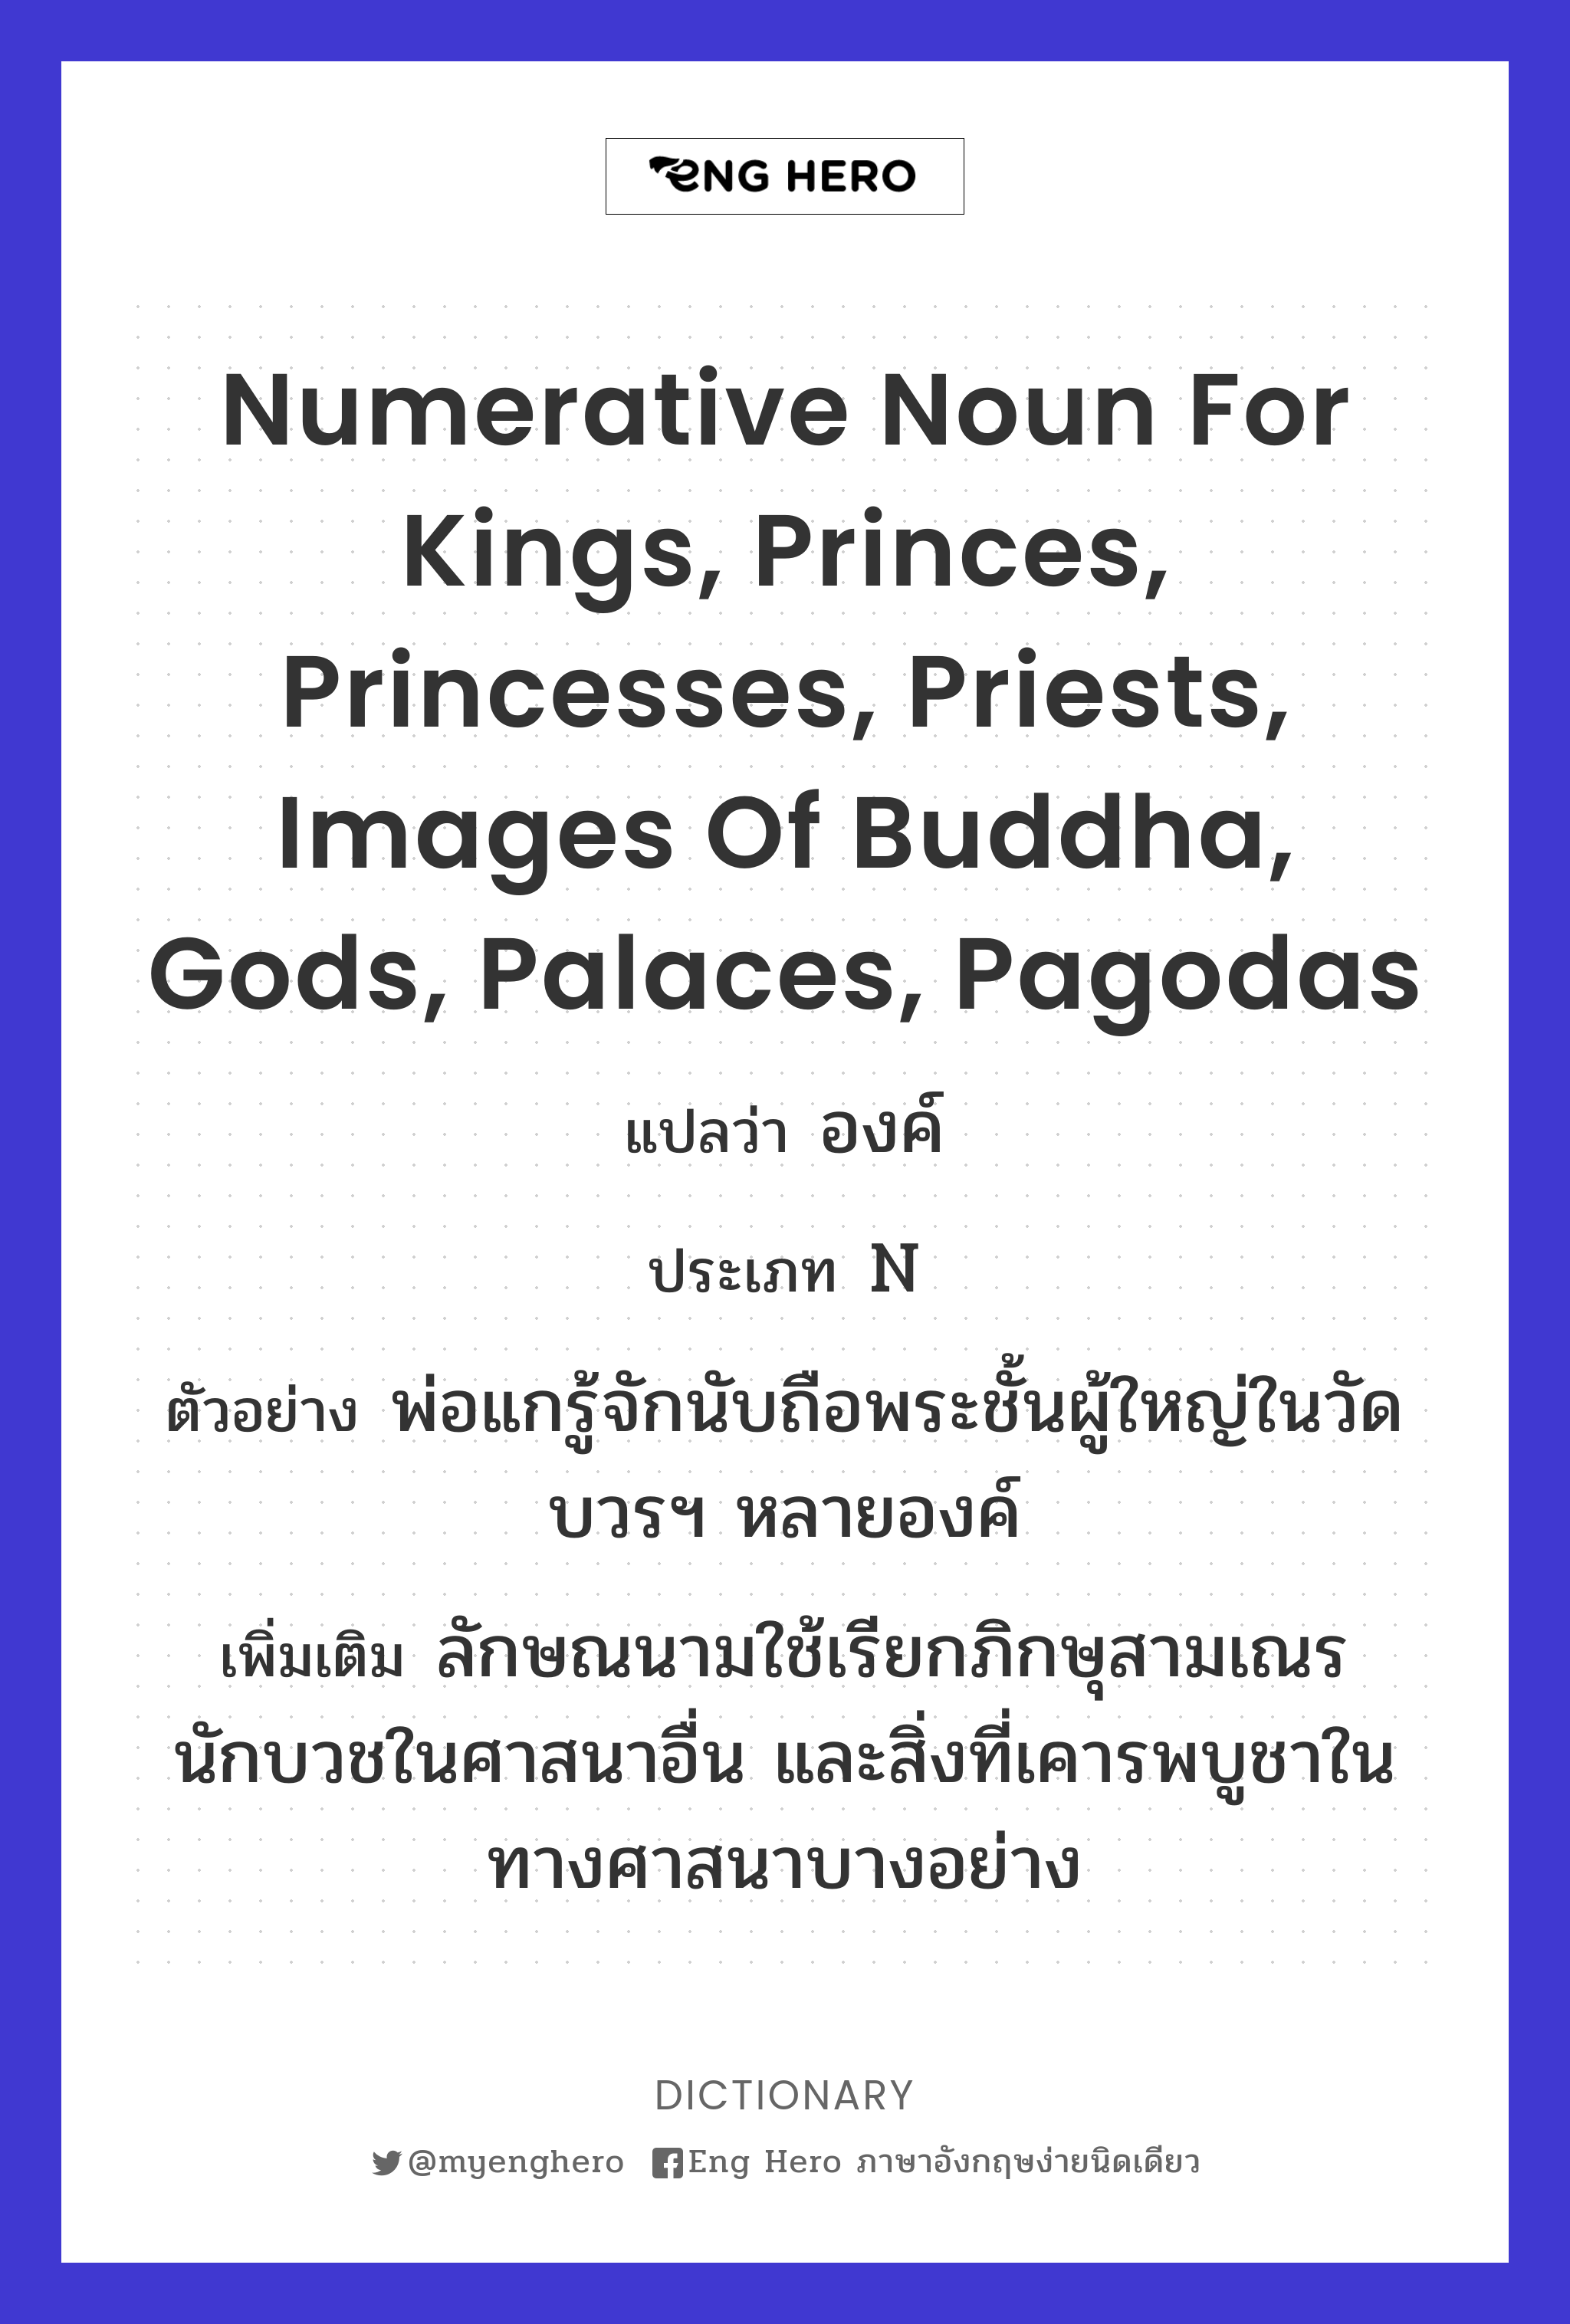 numerative noun for kings, princes, princesses, priests, images of Buddha, gods, palaces, pagodas